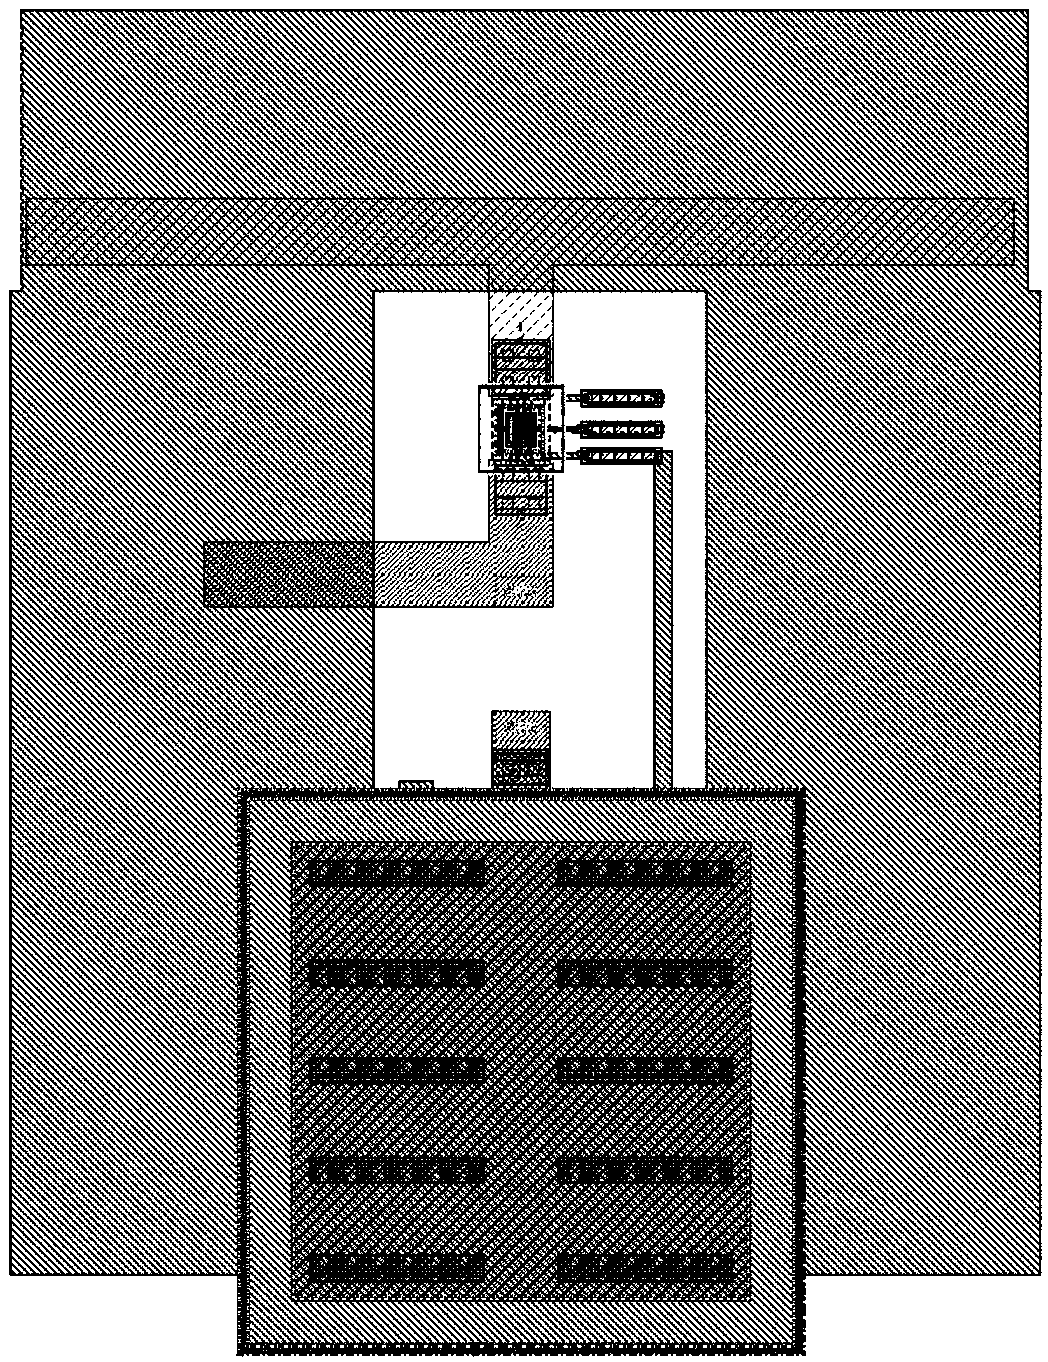 Numerical control attenuator based on capacitance compensation